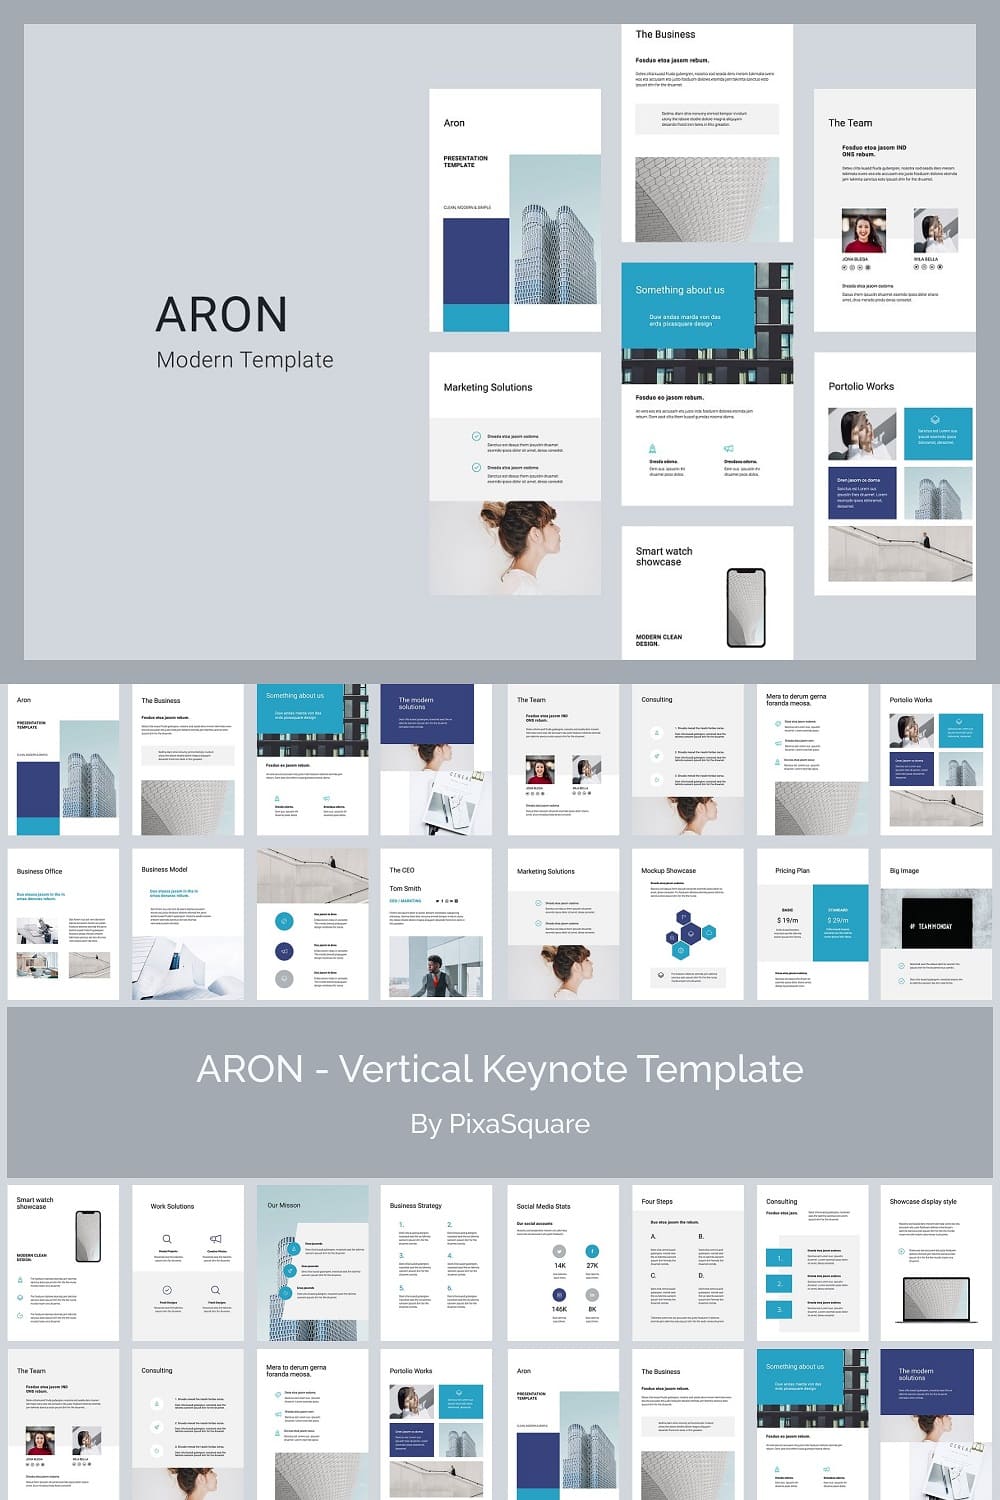 39 slides of Aron vertical keynote template in grey.